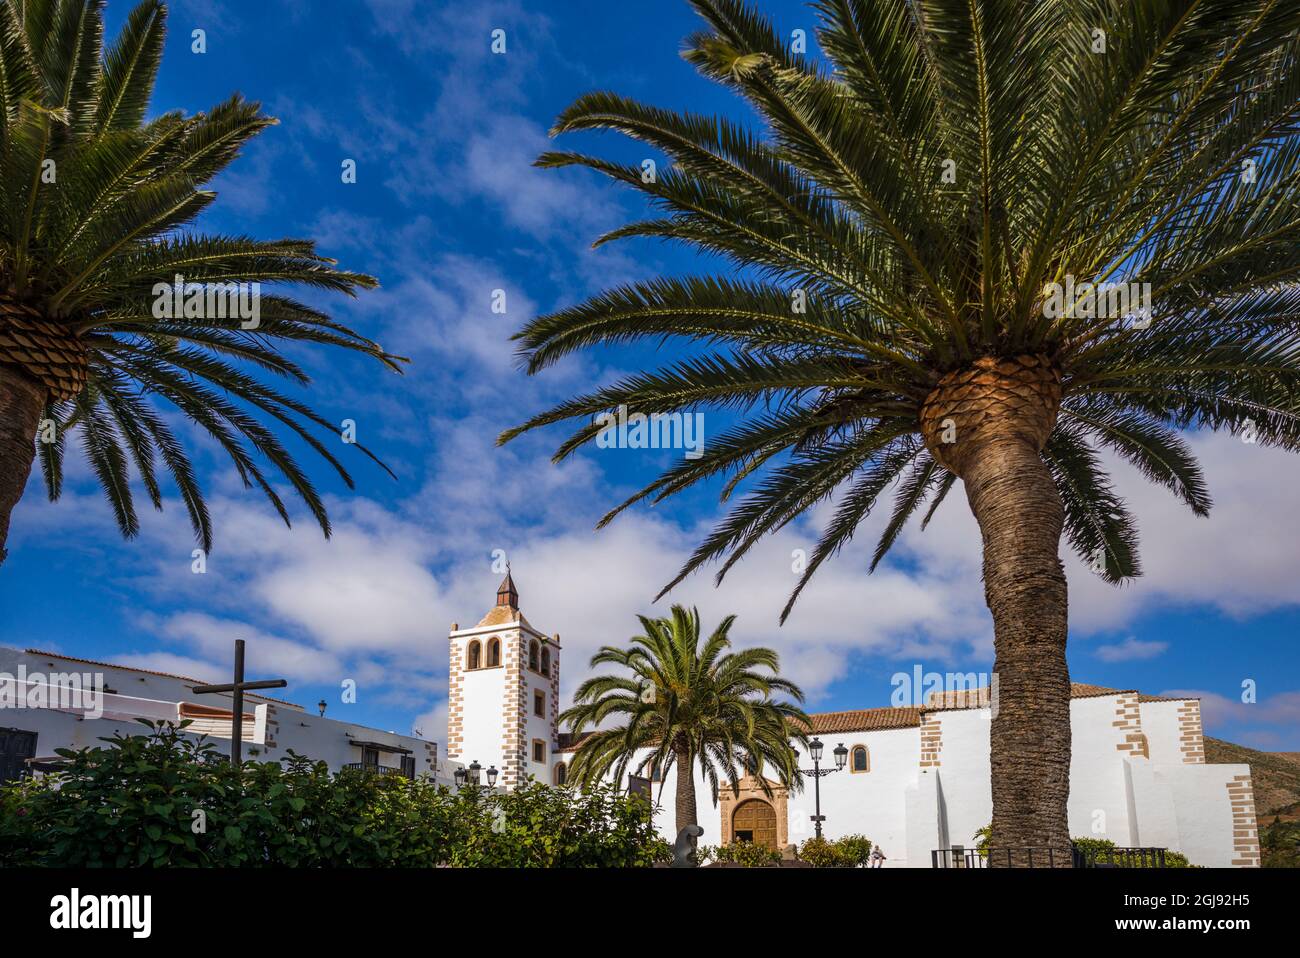 Spain, Canary Islands, Fuerteventura Island, Betancuria, Iglesia de Santa Maria church, exterior Stock Photo